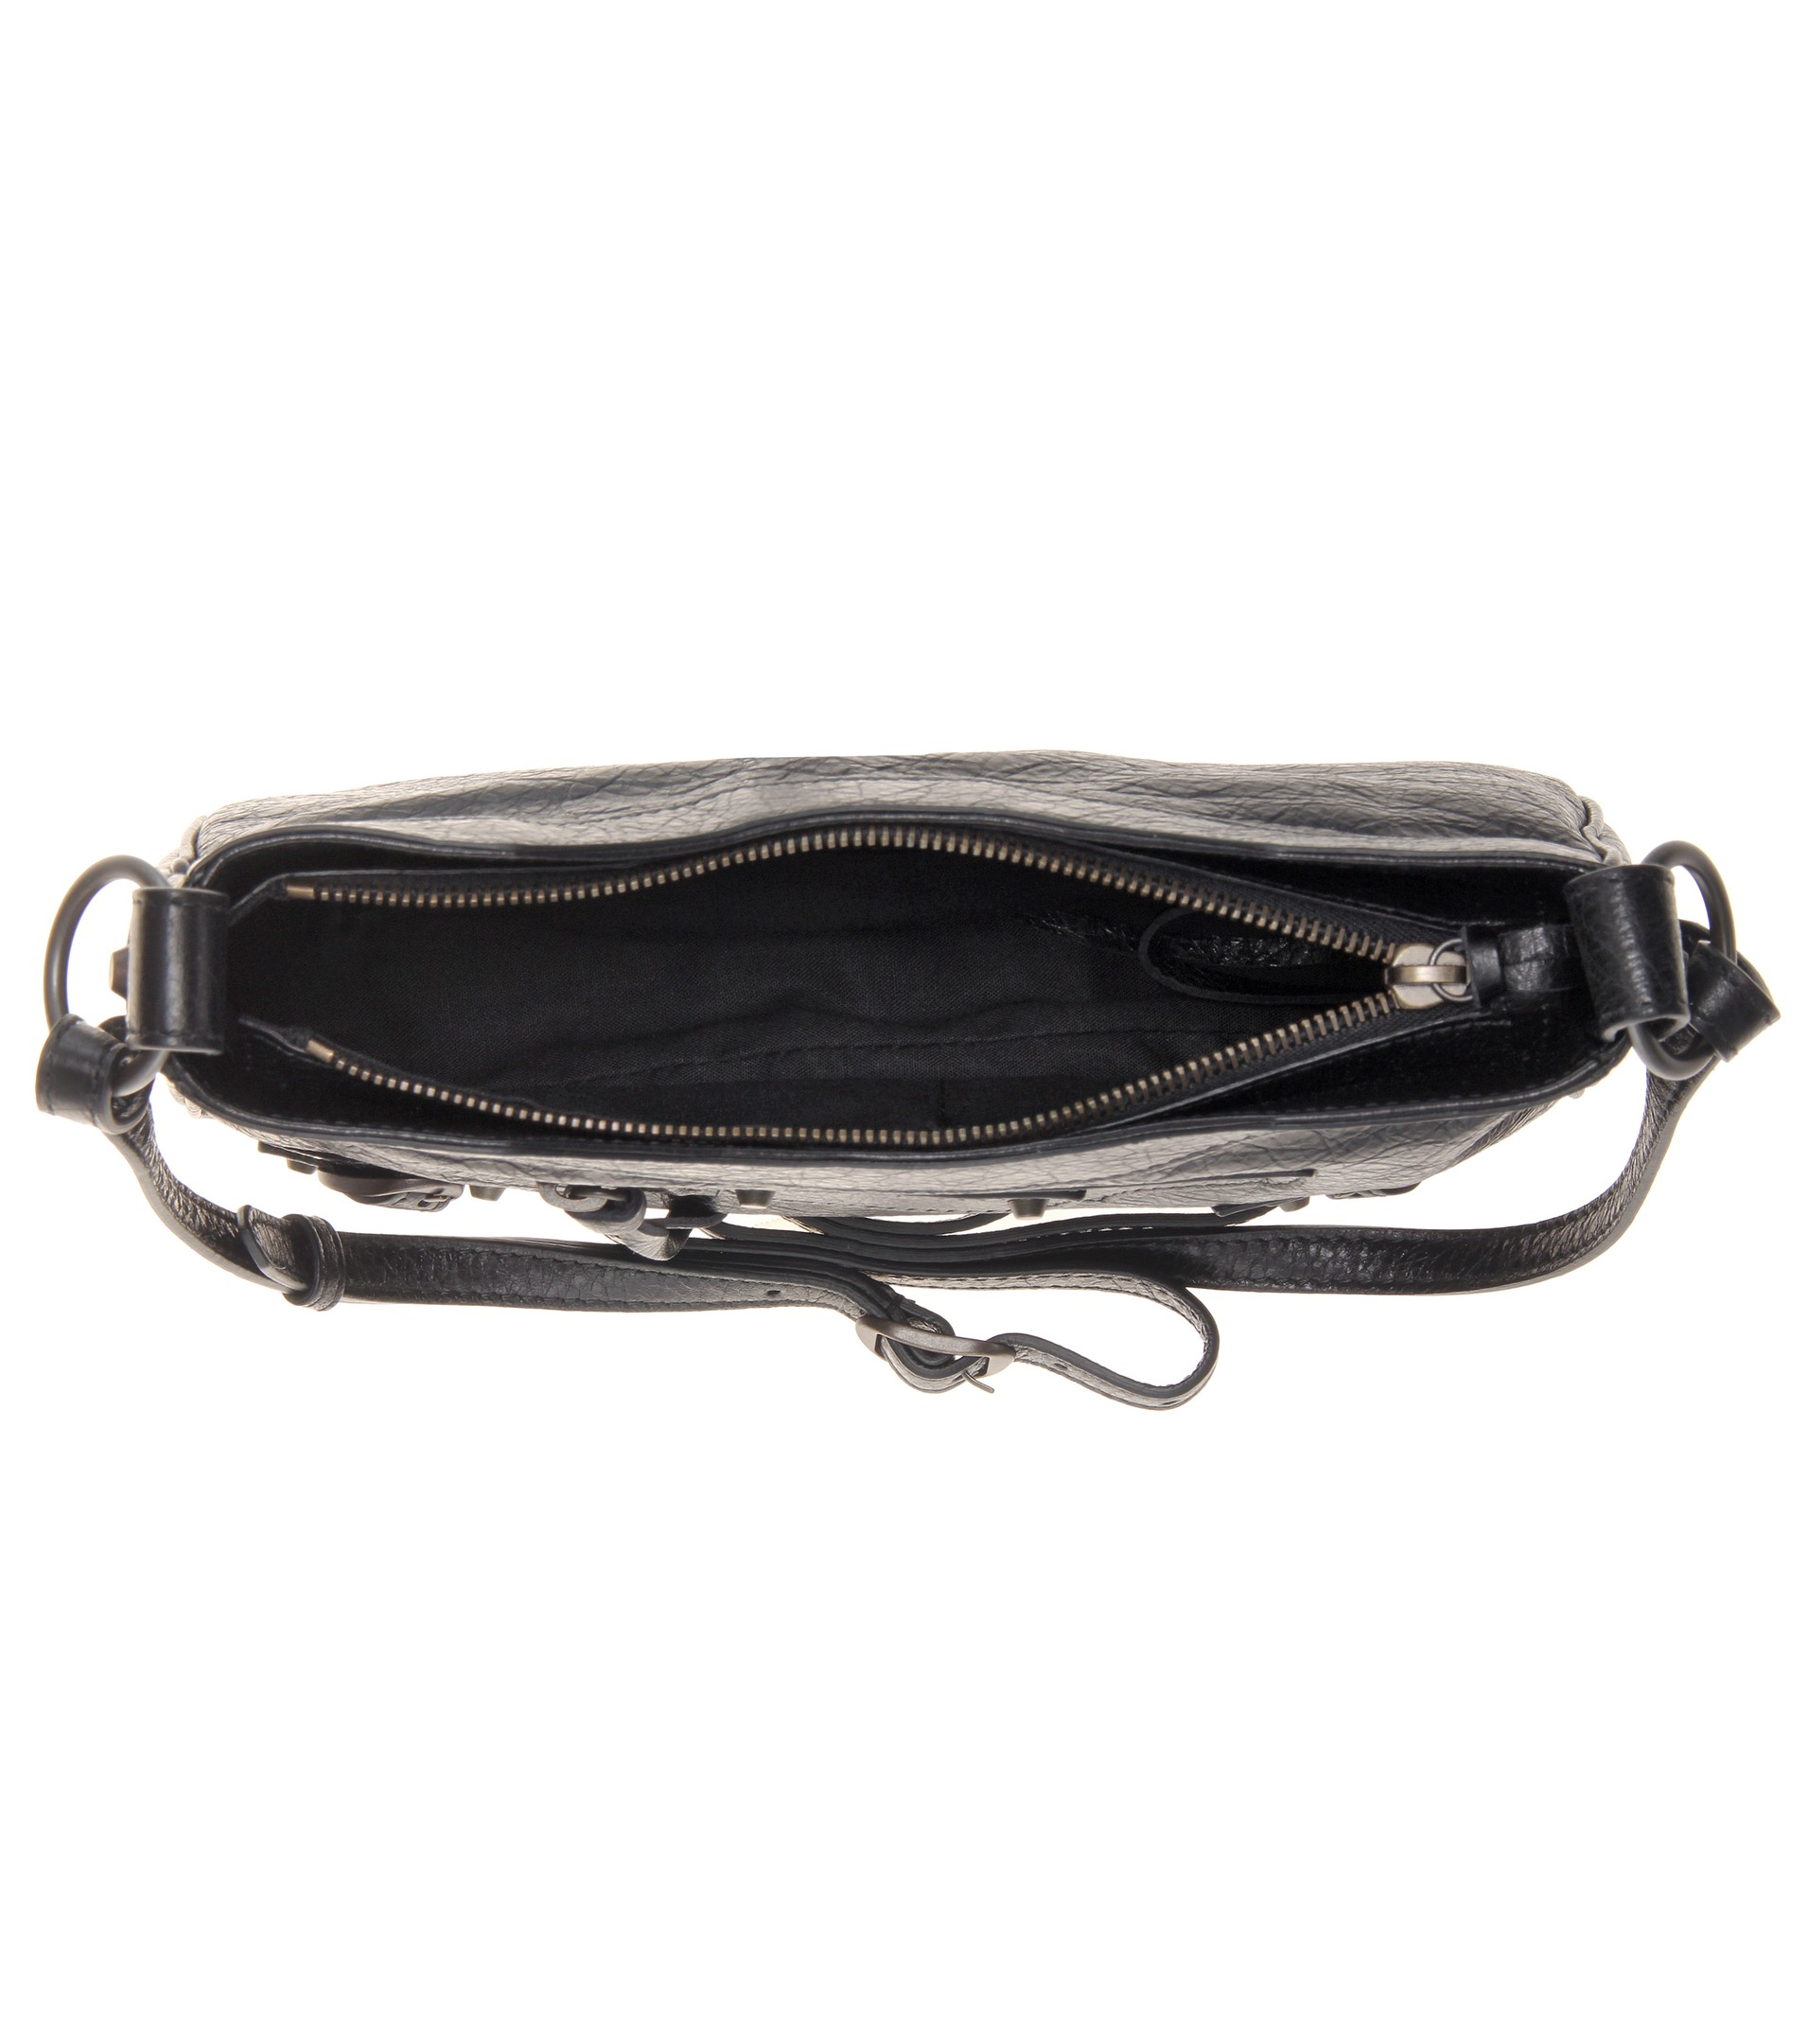 Balenciaga Classic Hip Leather Shoulder Bag in Nero (Black) - Lyst